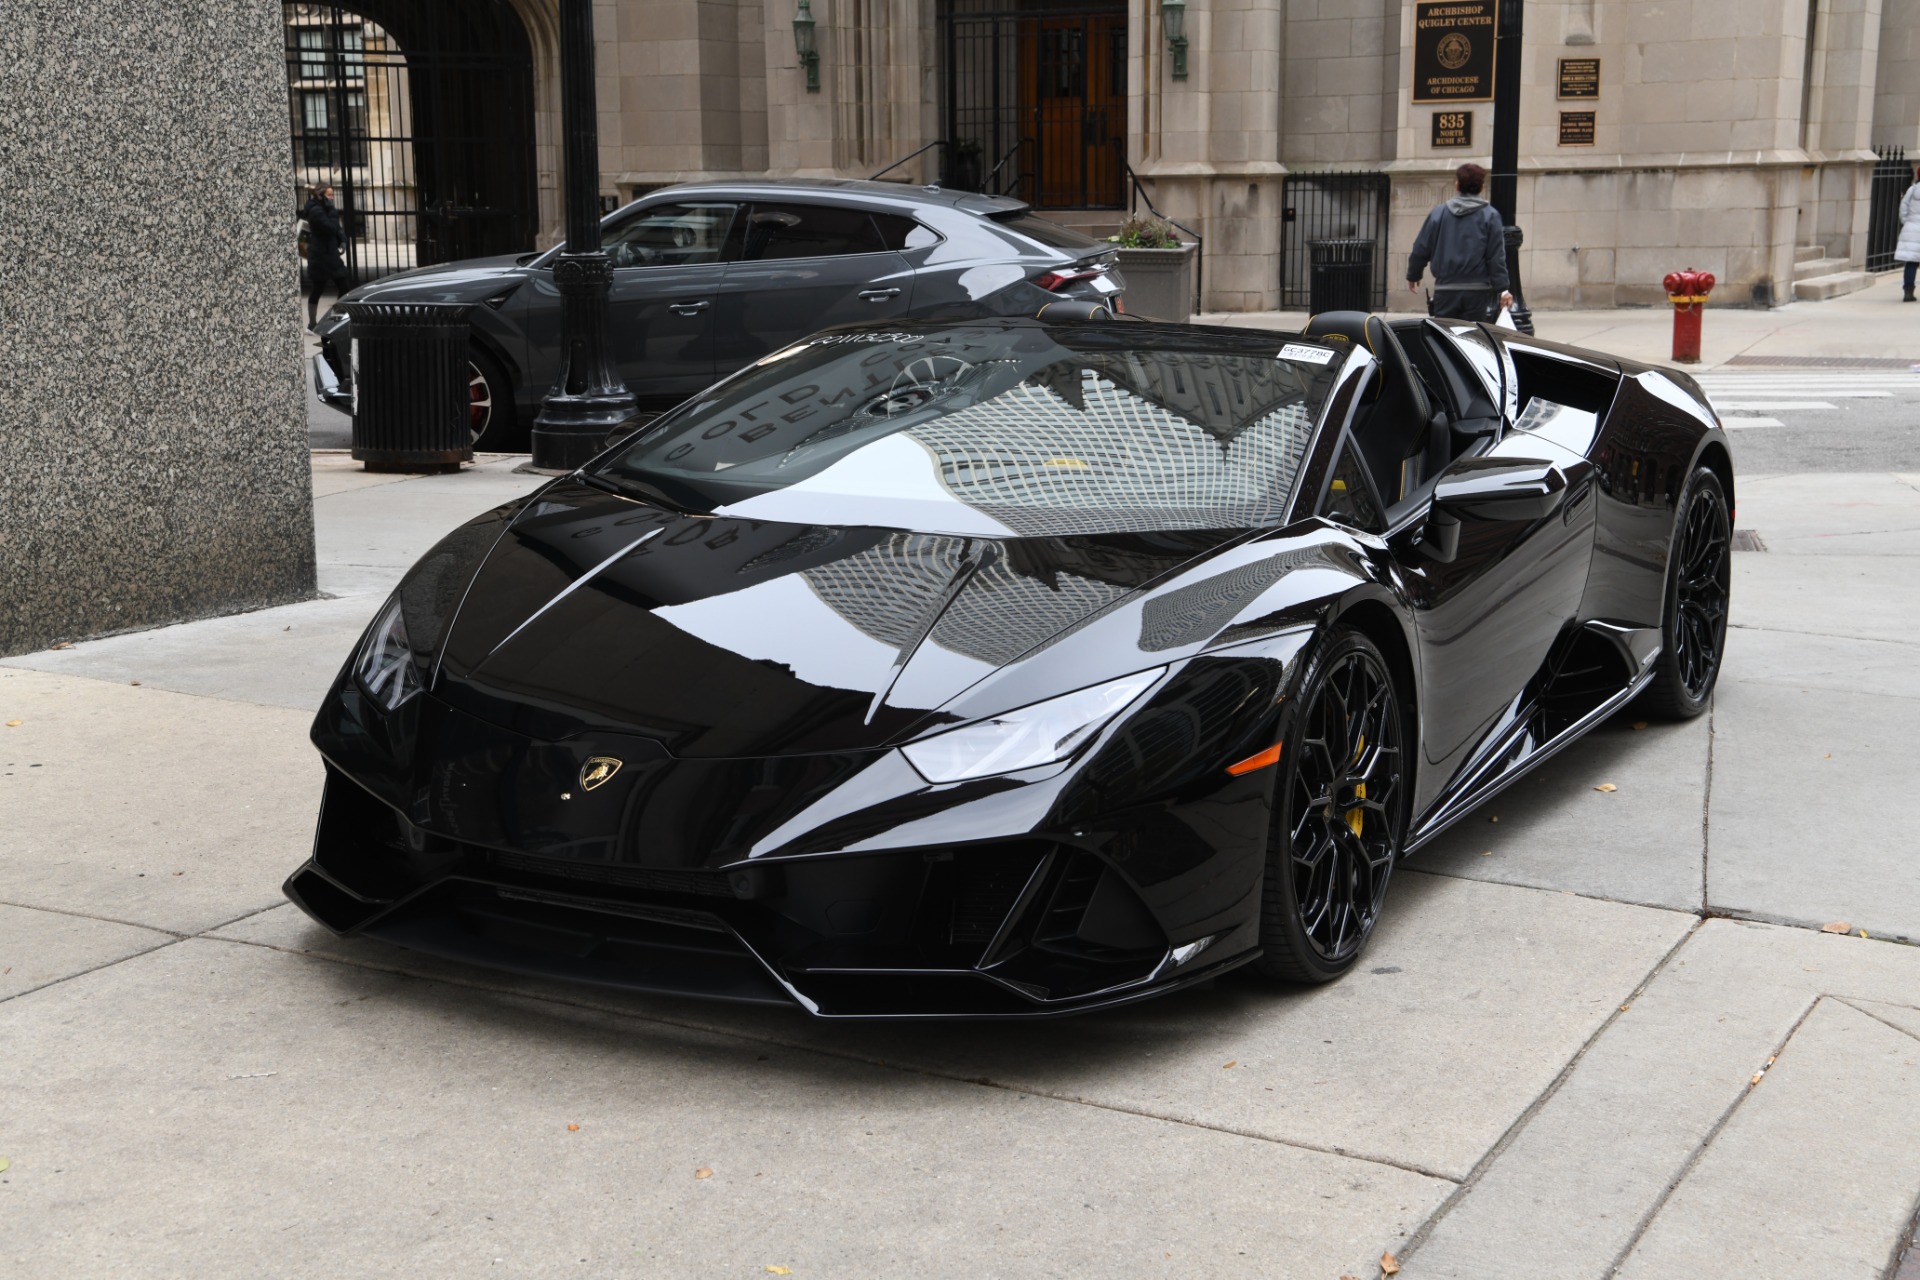 https://www.lamborghinigoldcoast.com/imagetag/10411/2/l/Used-2020-Lamborghini-Huracan-Spyder-LP-640-4-EVO-Spyder-1700941692.jpg